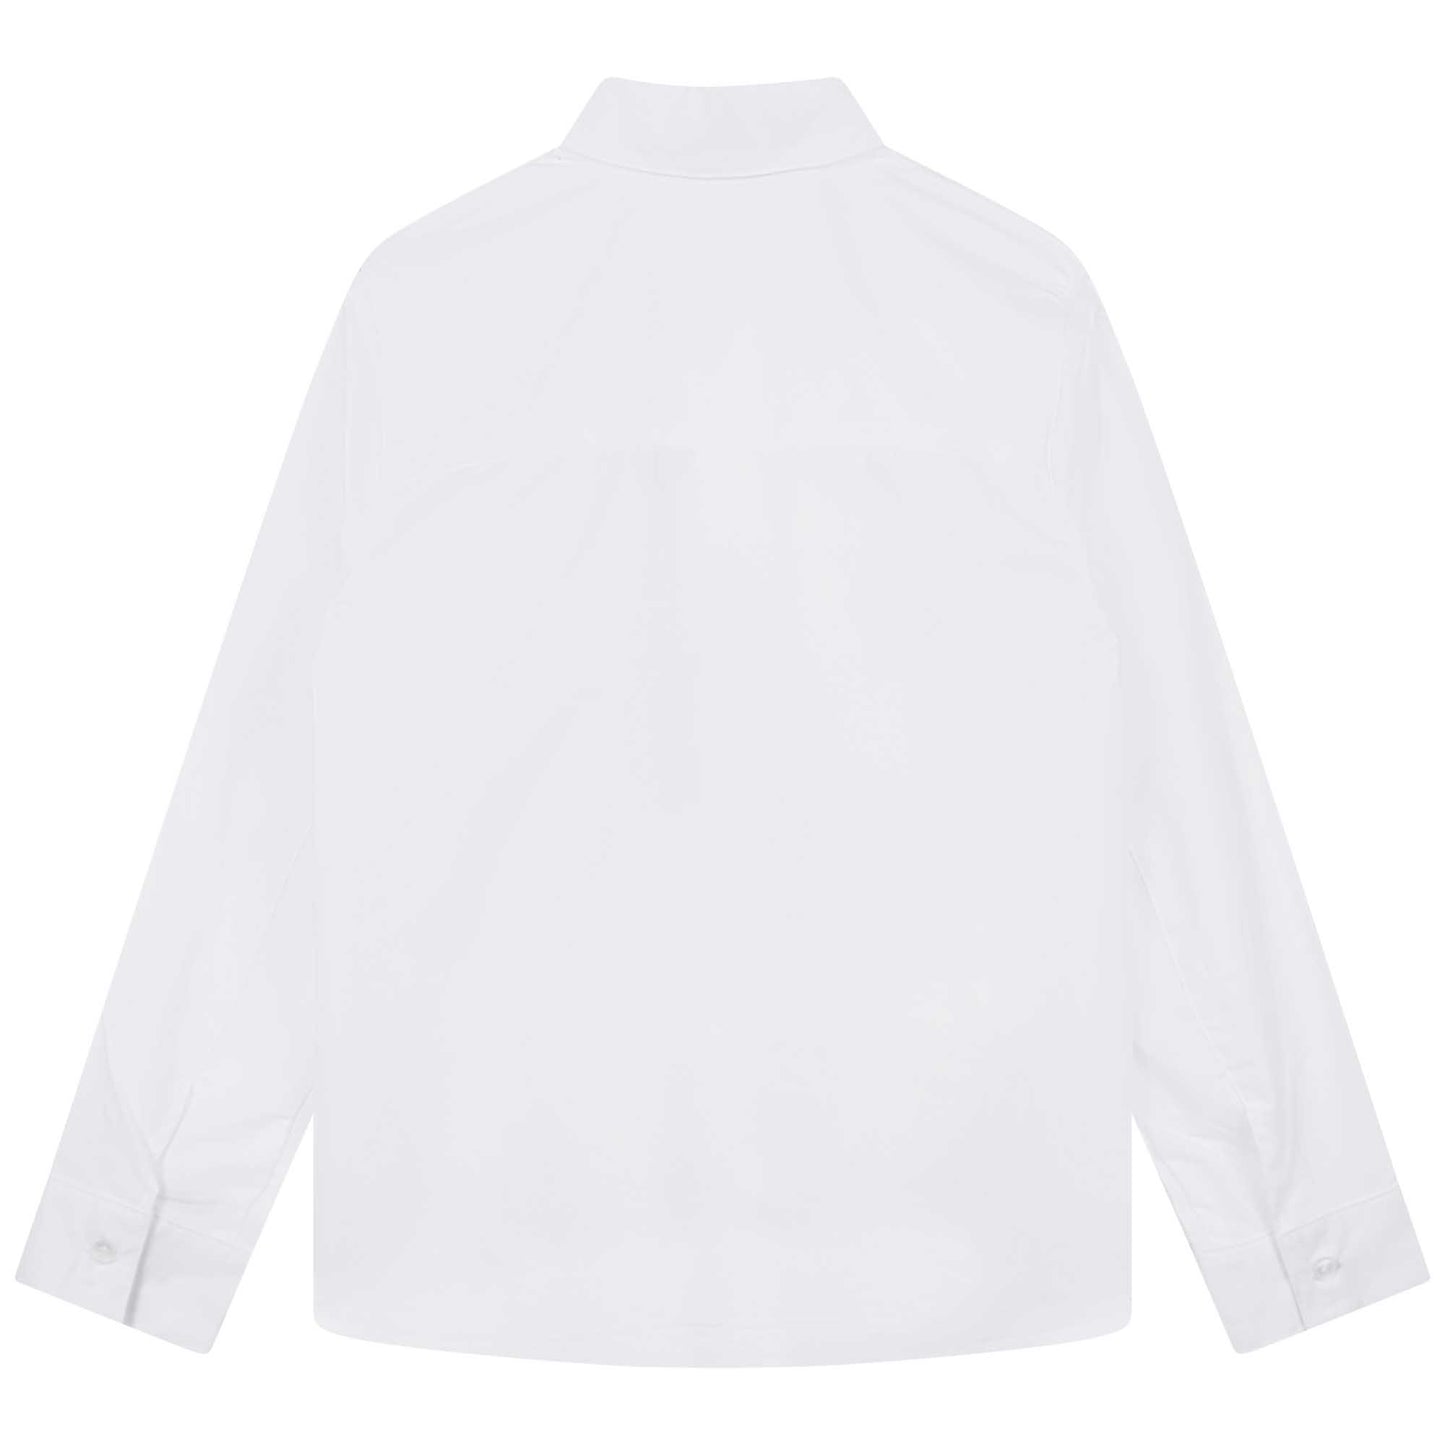 Karl Lagerfeld Boys Button Up Shirt w/ Logo